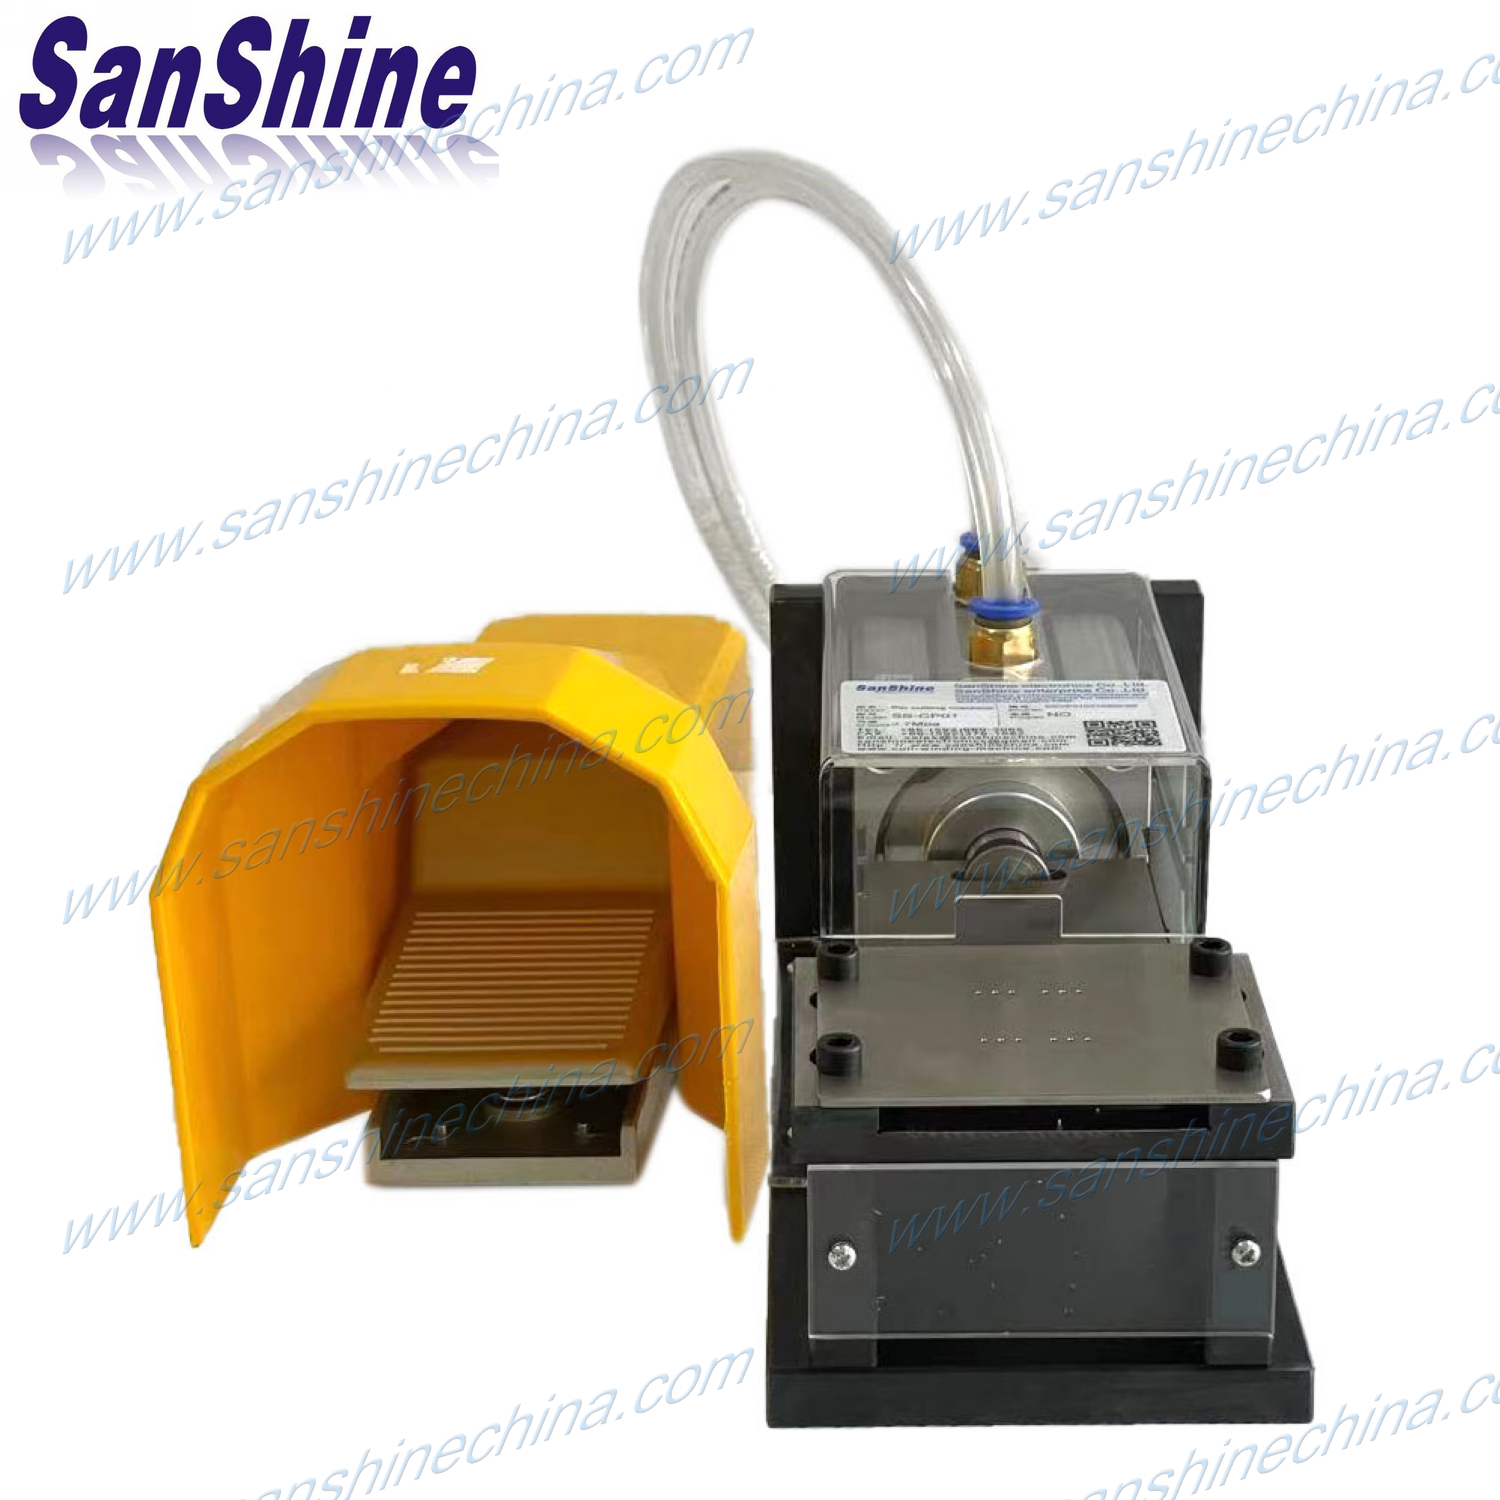 Automatic pin cutting machine (SS-CP01)